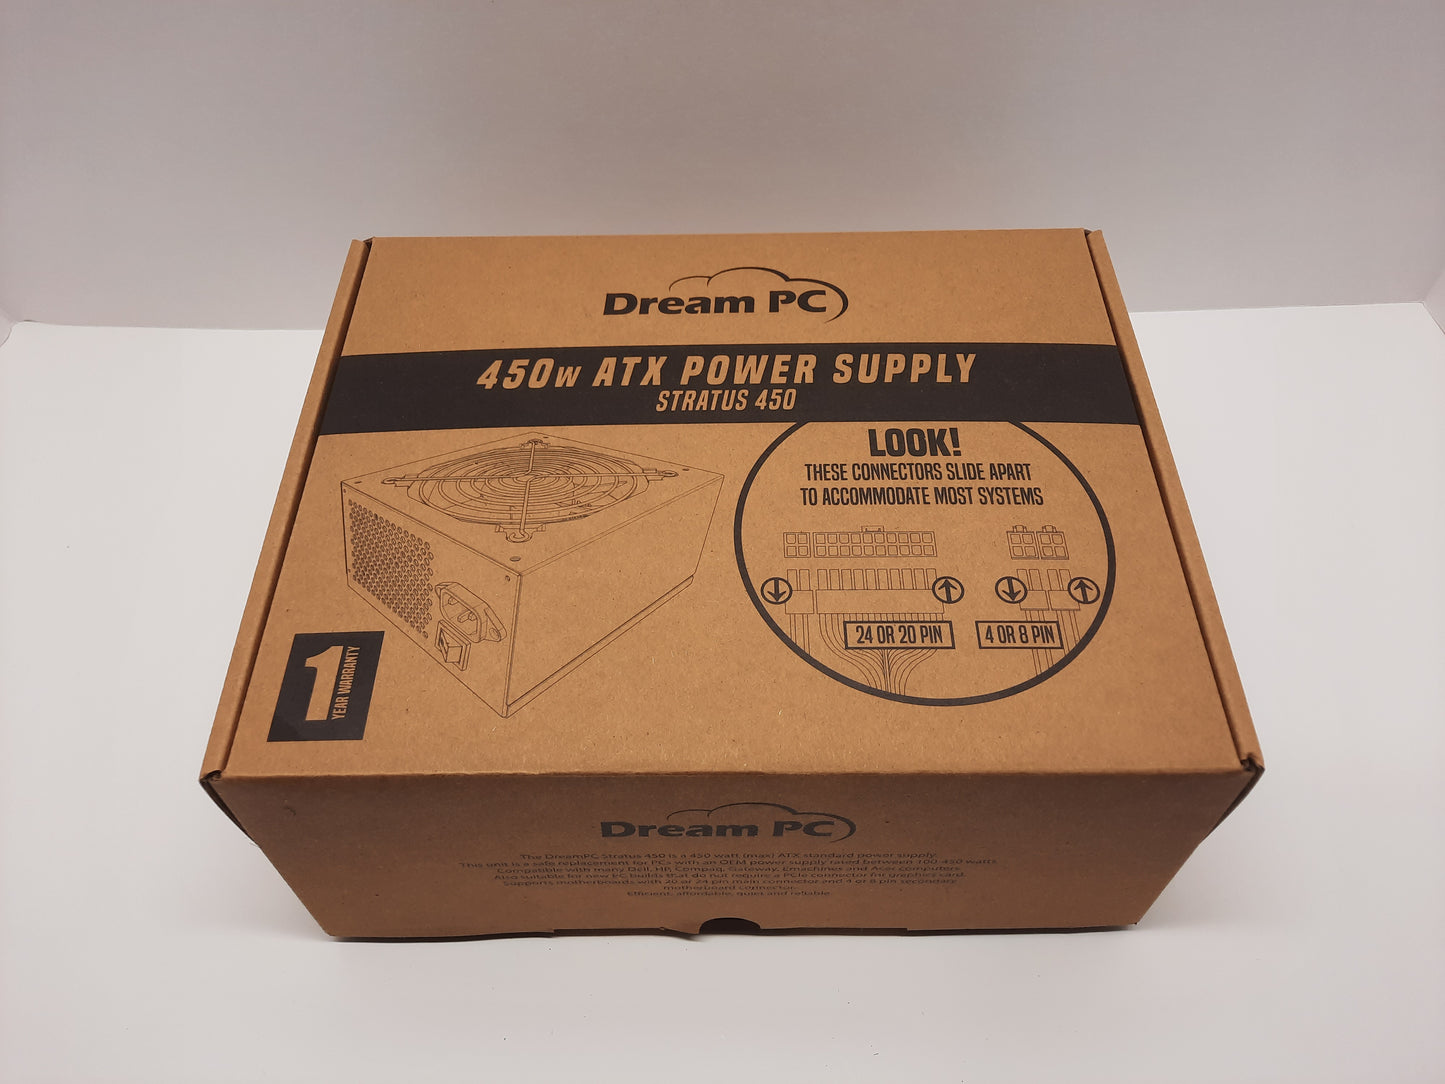 DreamPC strutus 450 DPC-ATX-450W Power Supply